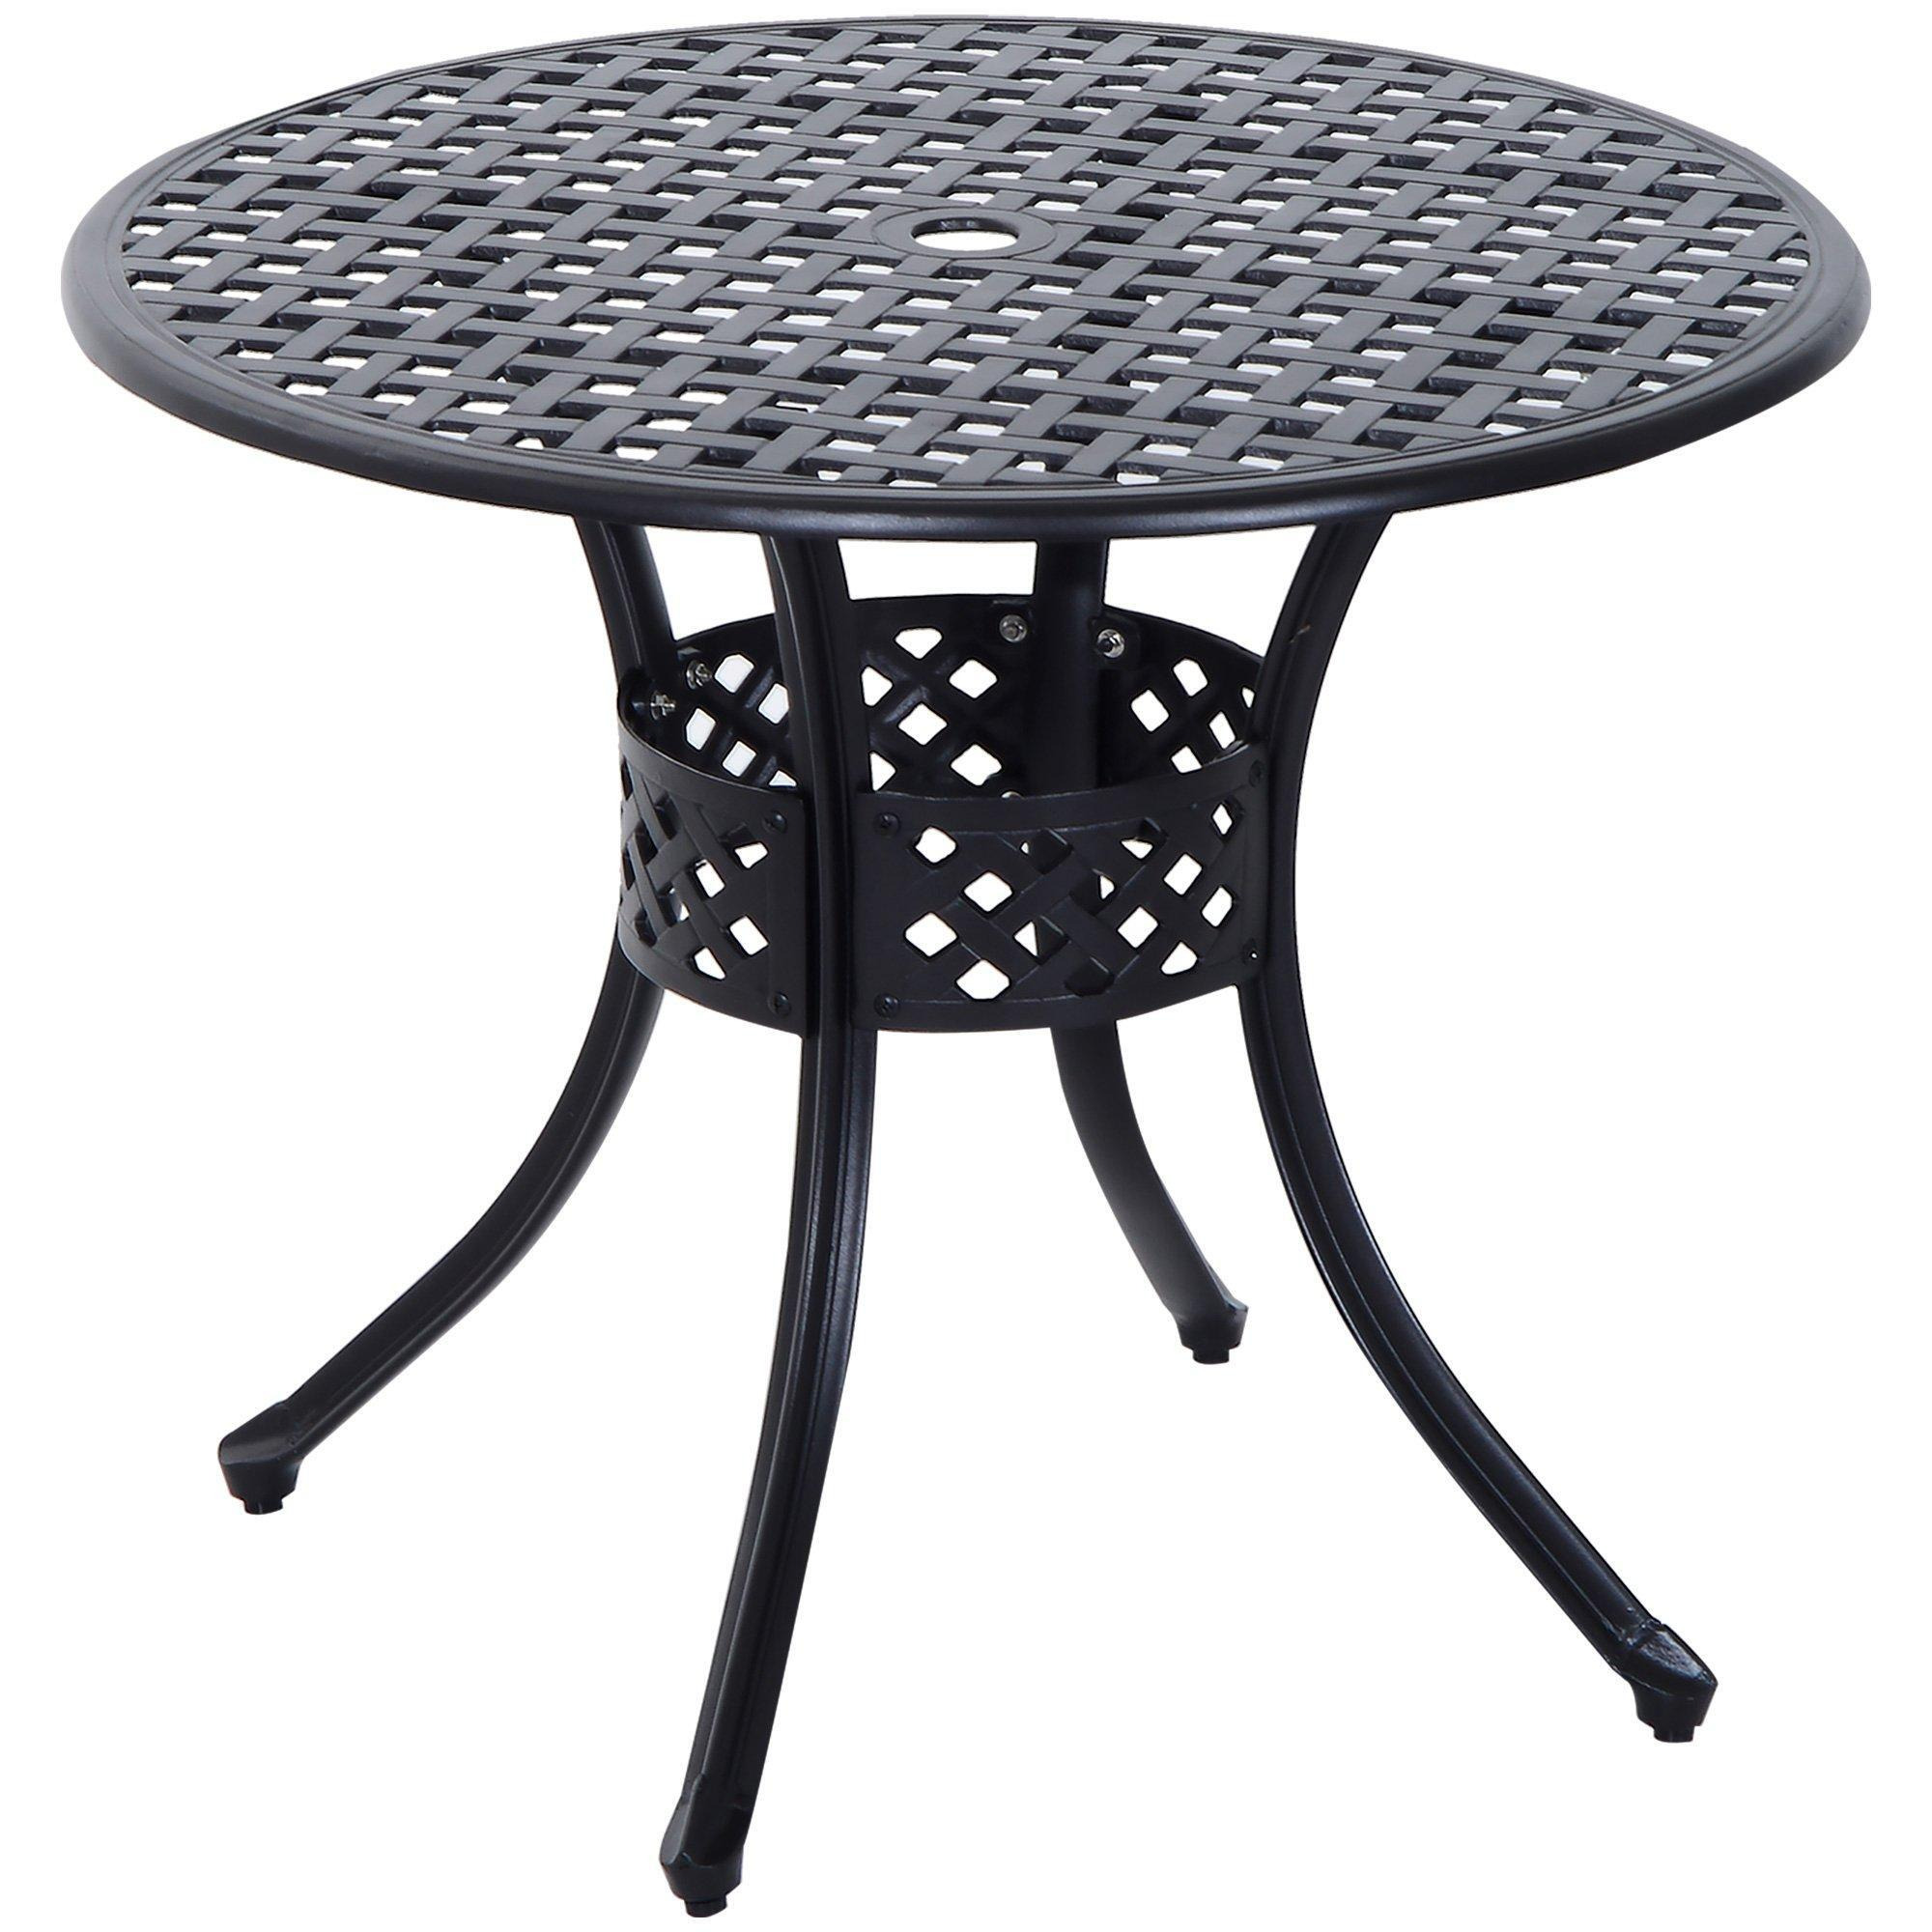 Aluminium Outdoor Garden Dining Table with Umbrella Hole, Black - image 1